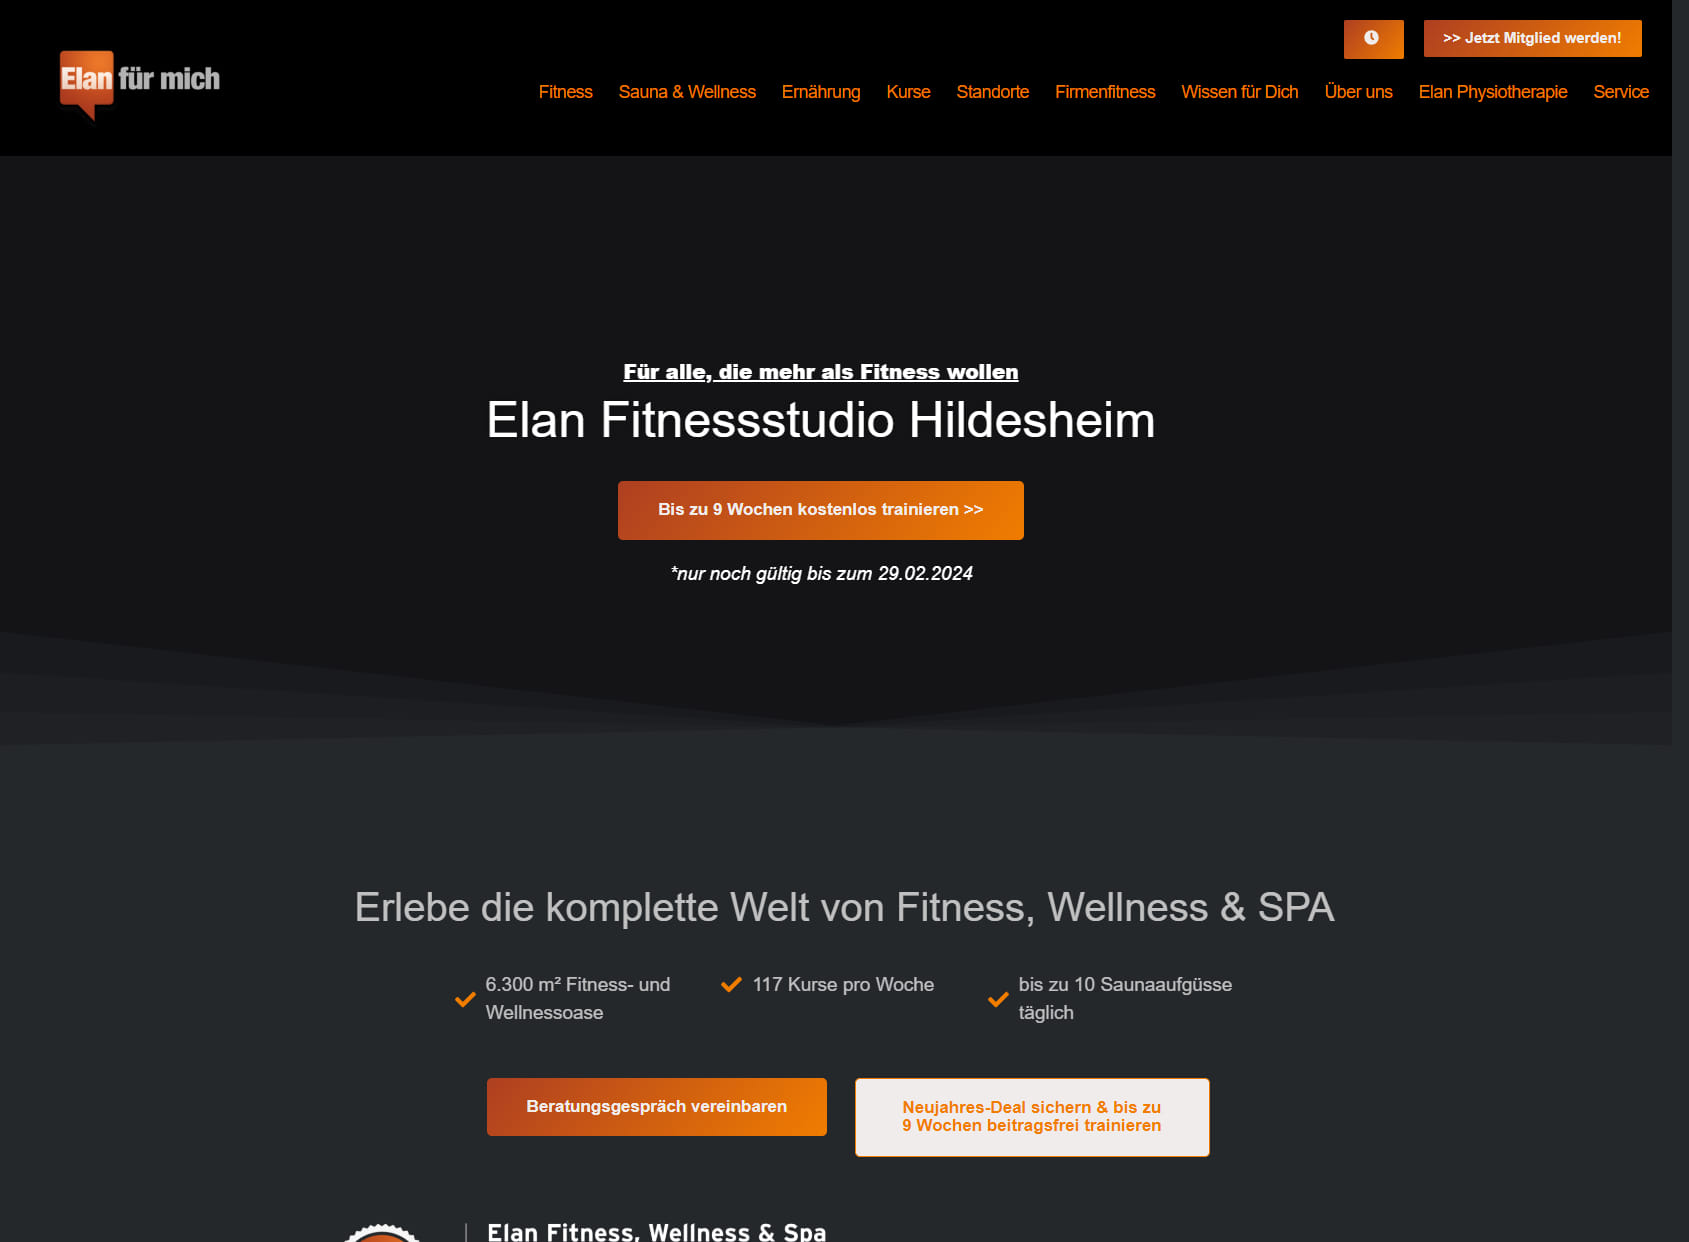 Elan Fitnessstudio Hildesheim